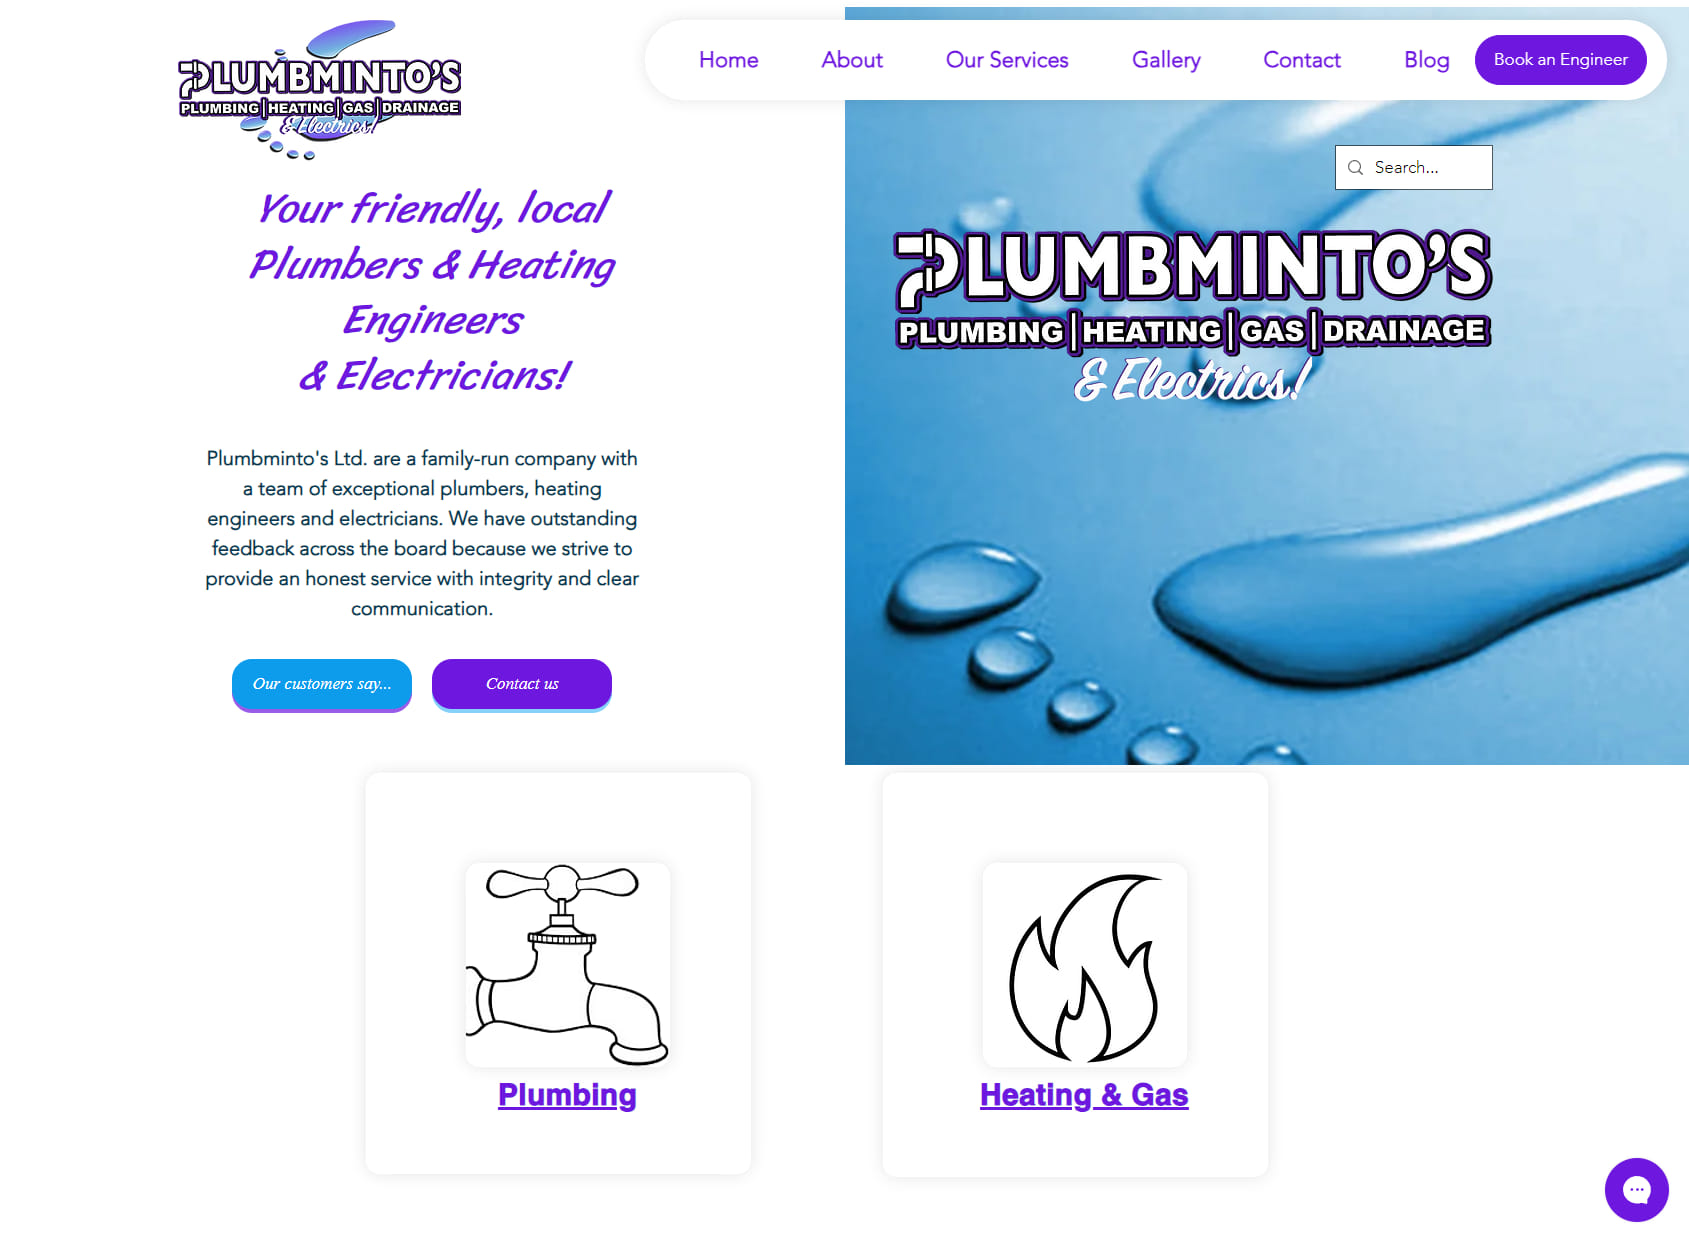 Plumbminto’s Ltd